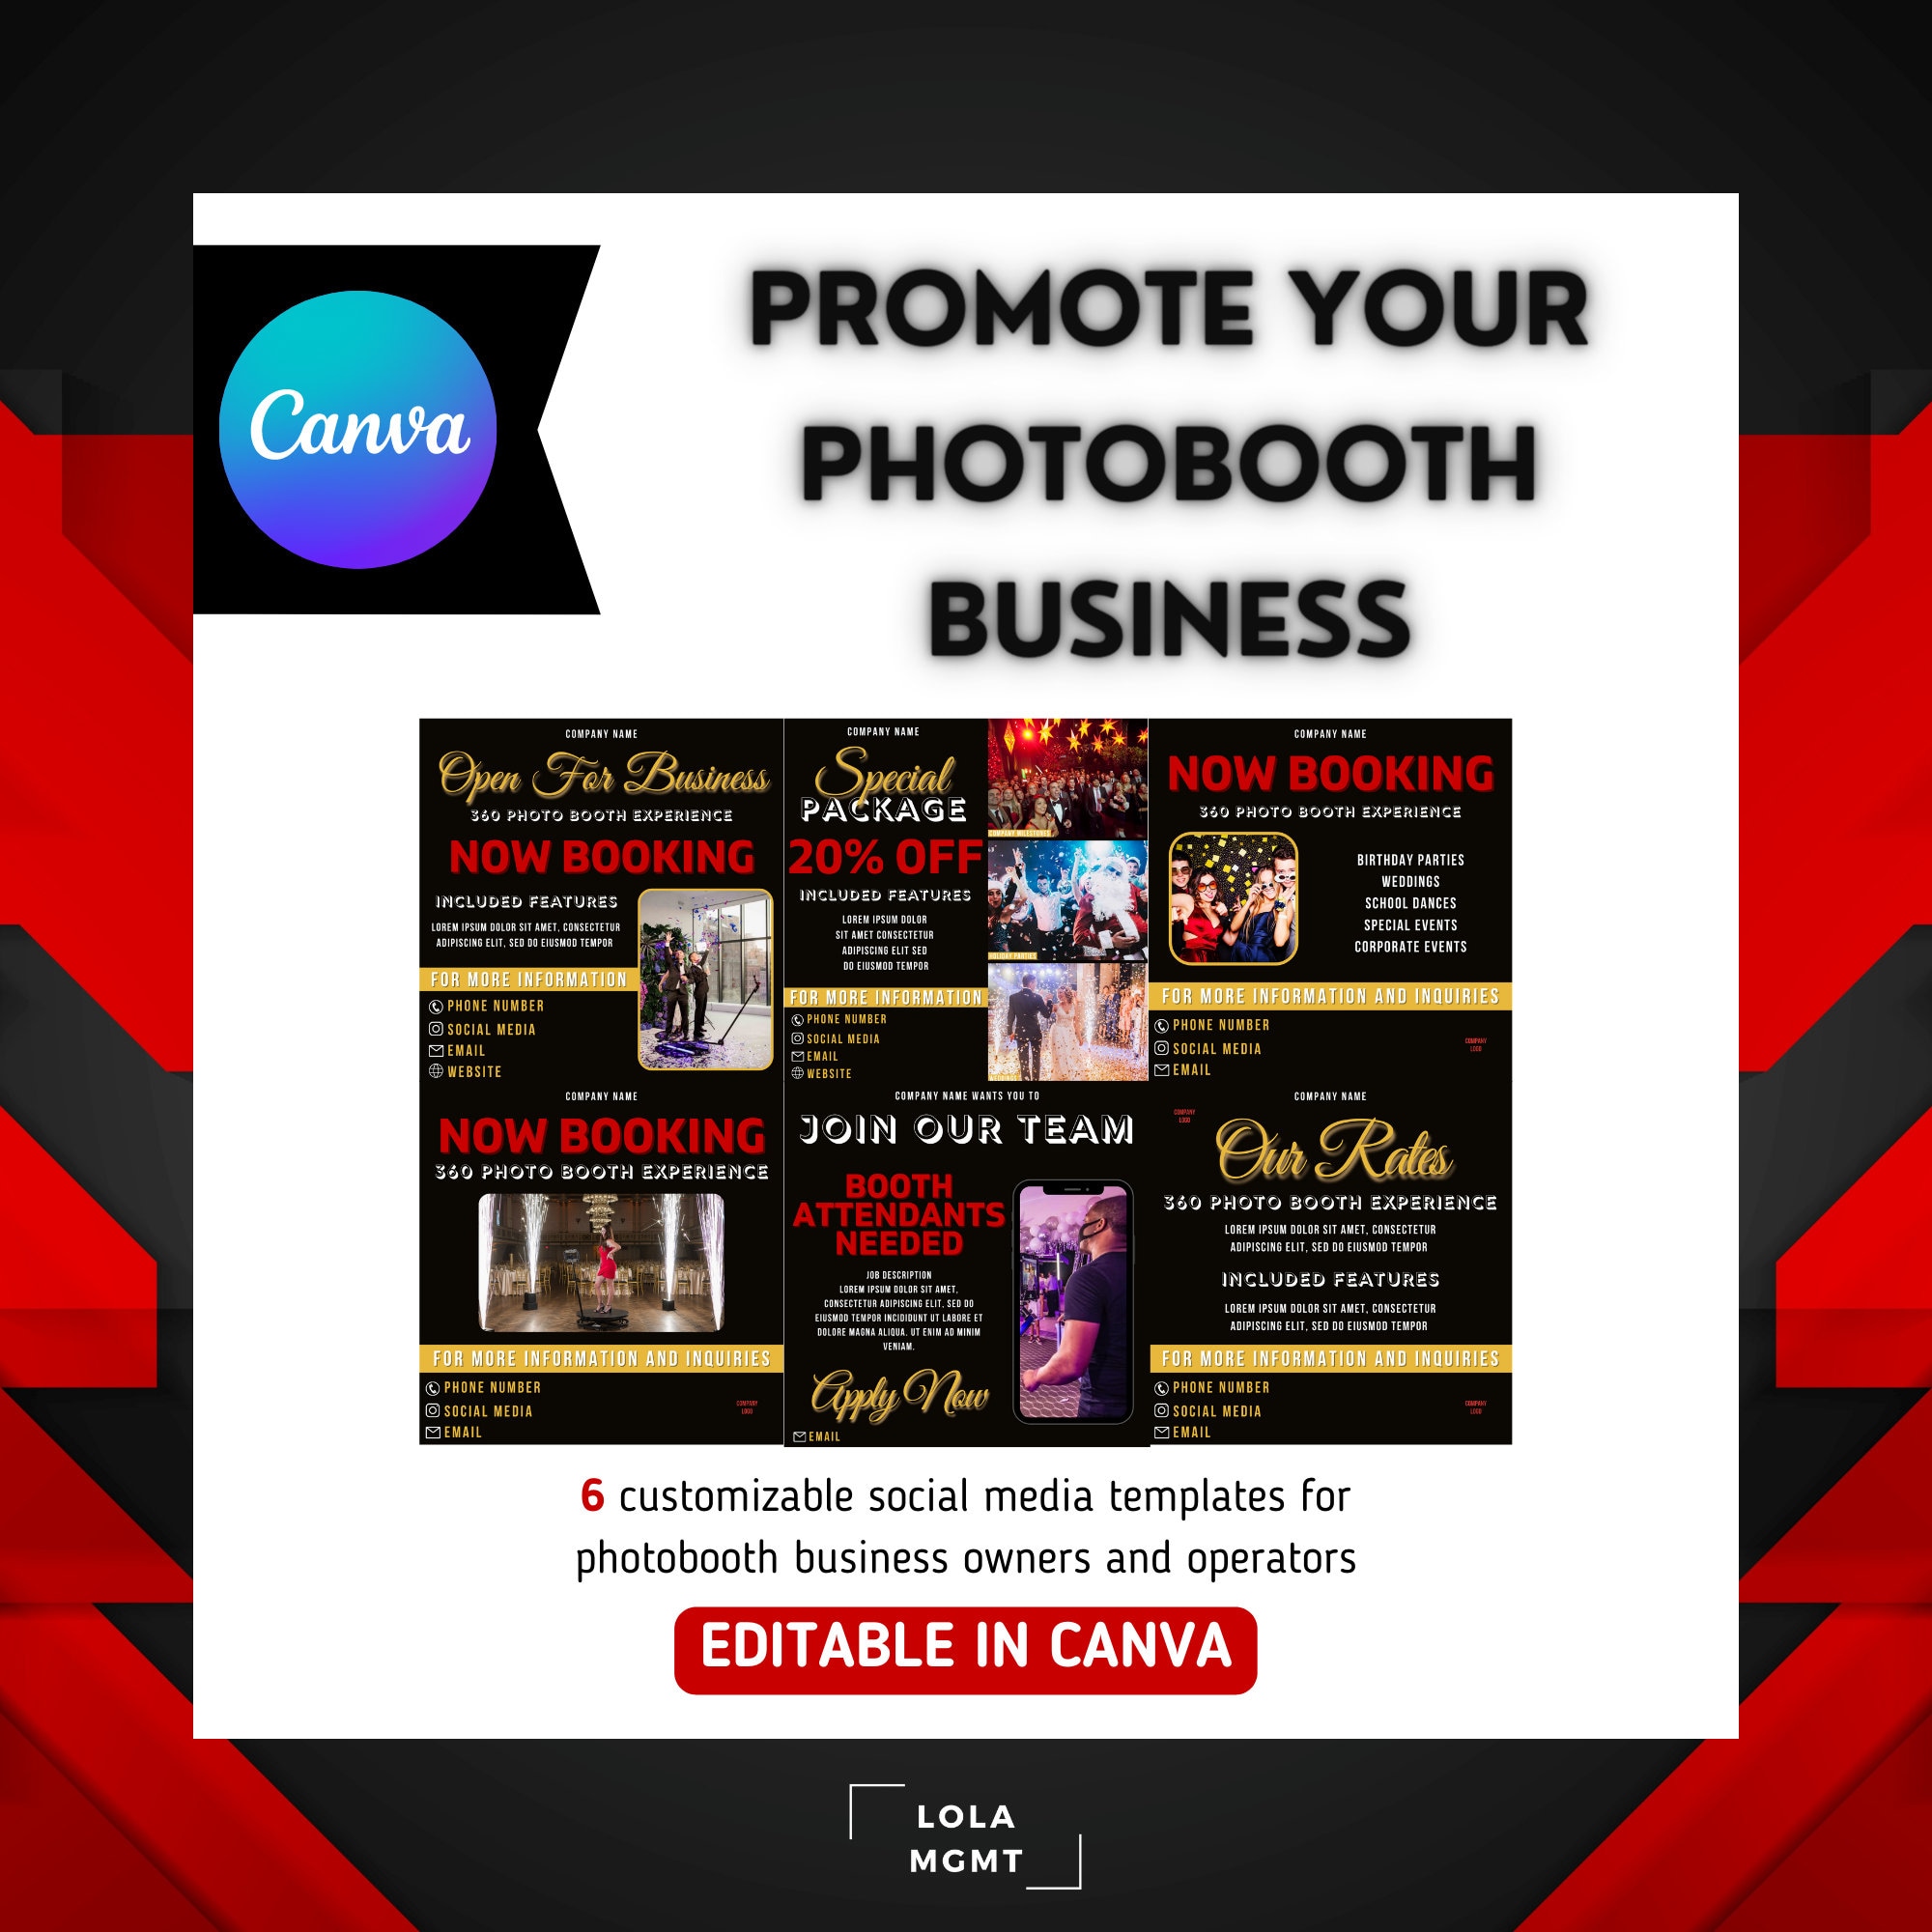 2x MAGIC MIRROR Photo Booth Flyer, Premade Business Social Media